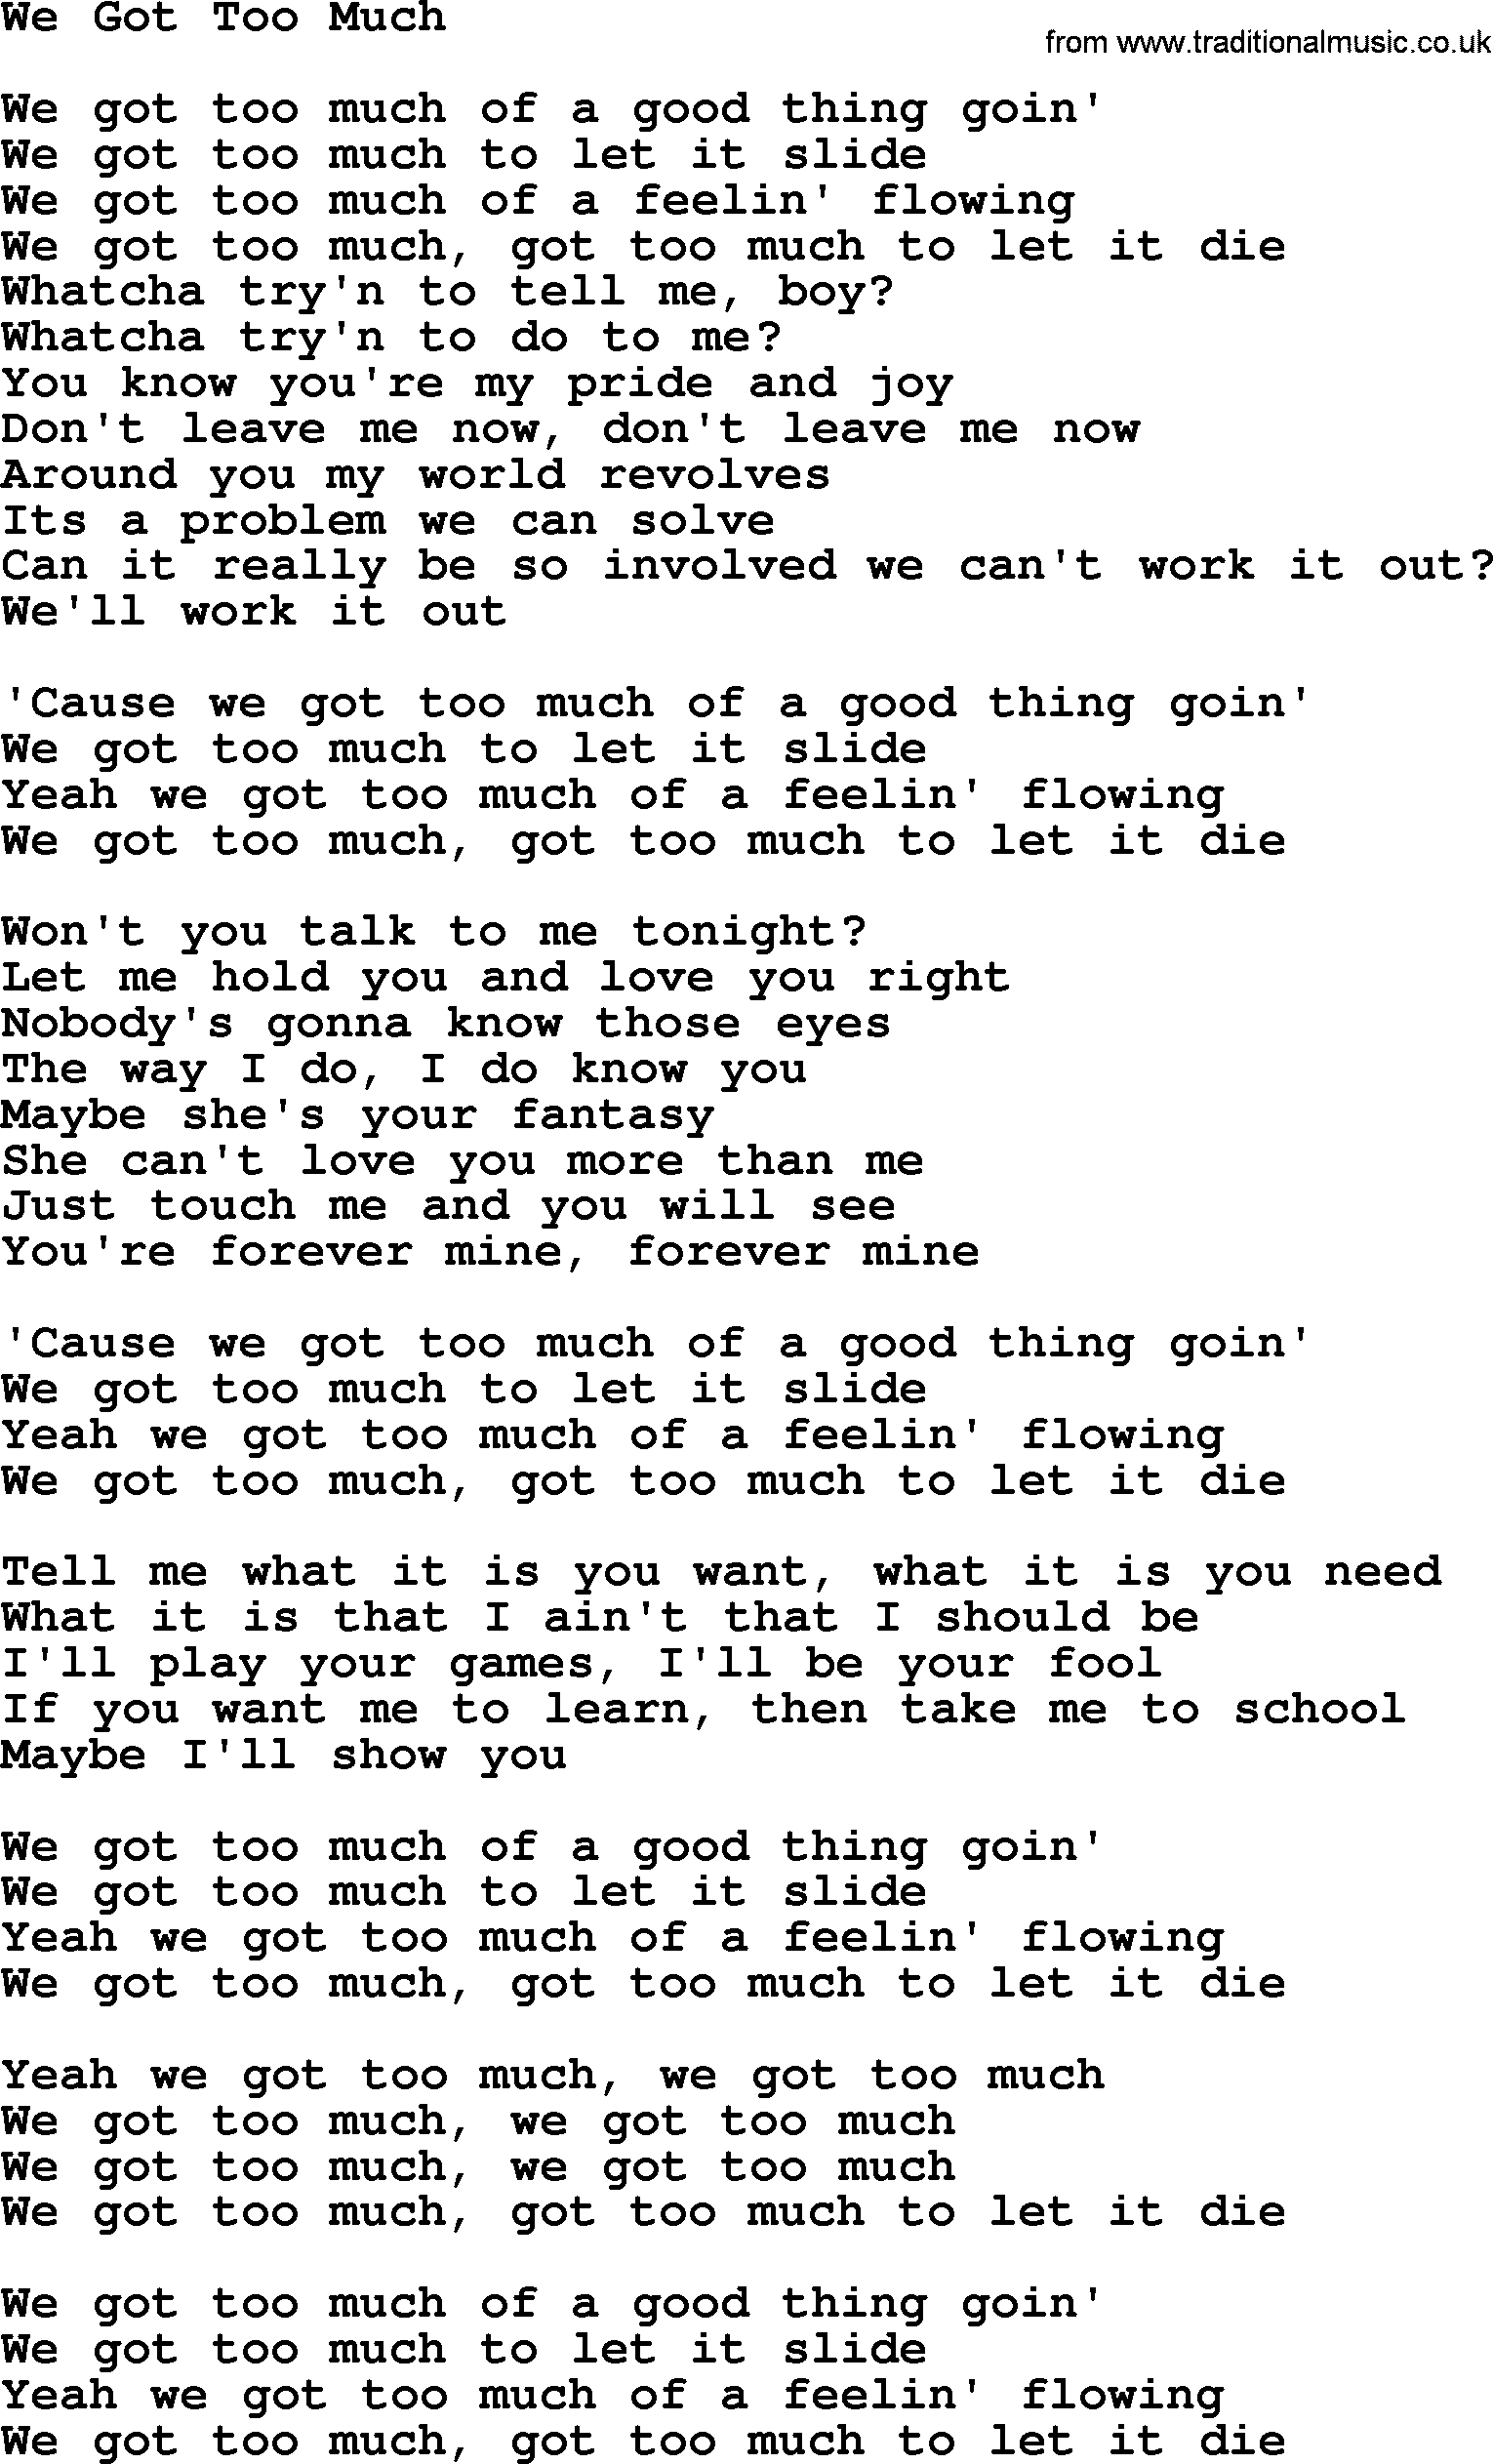 Dolly Parton song We Got Too Much.txt lyrics